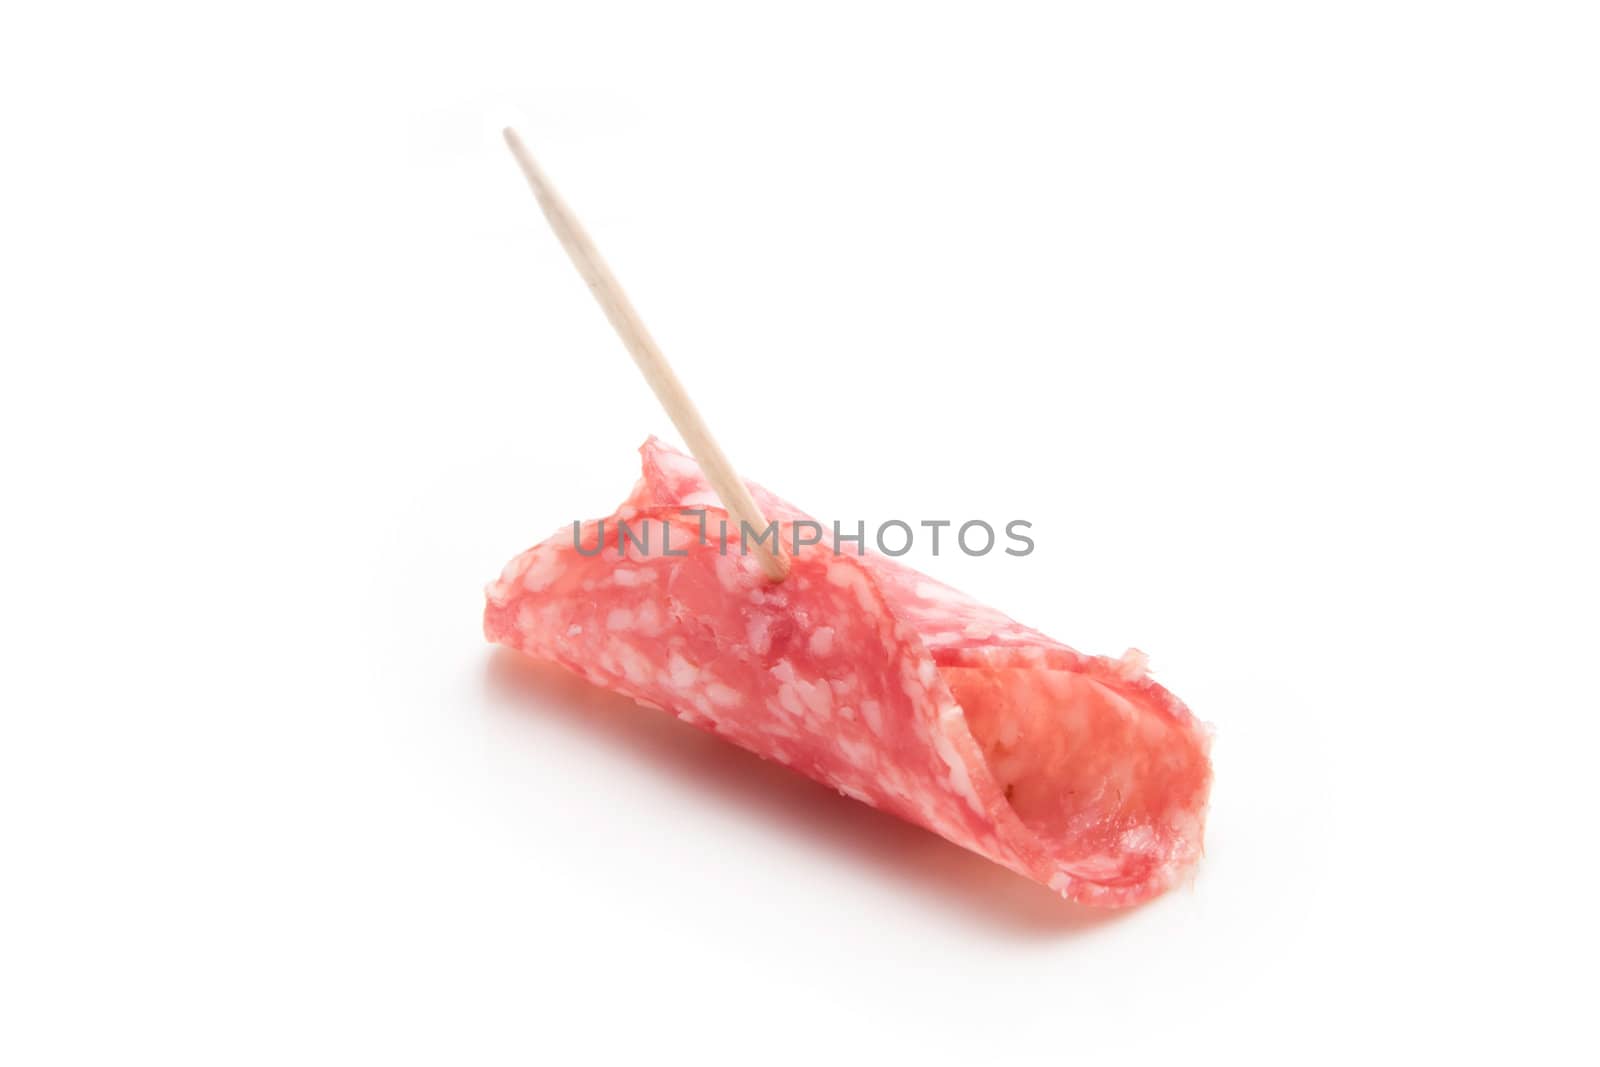 Slice of salami on a toothpick